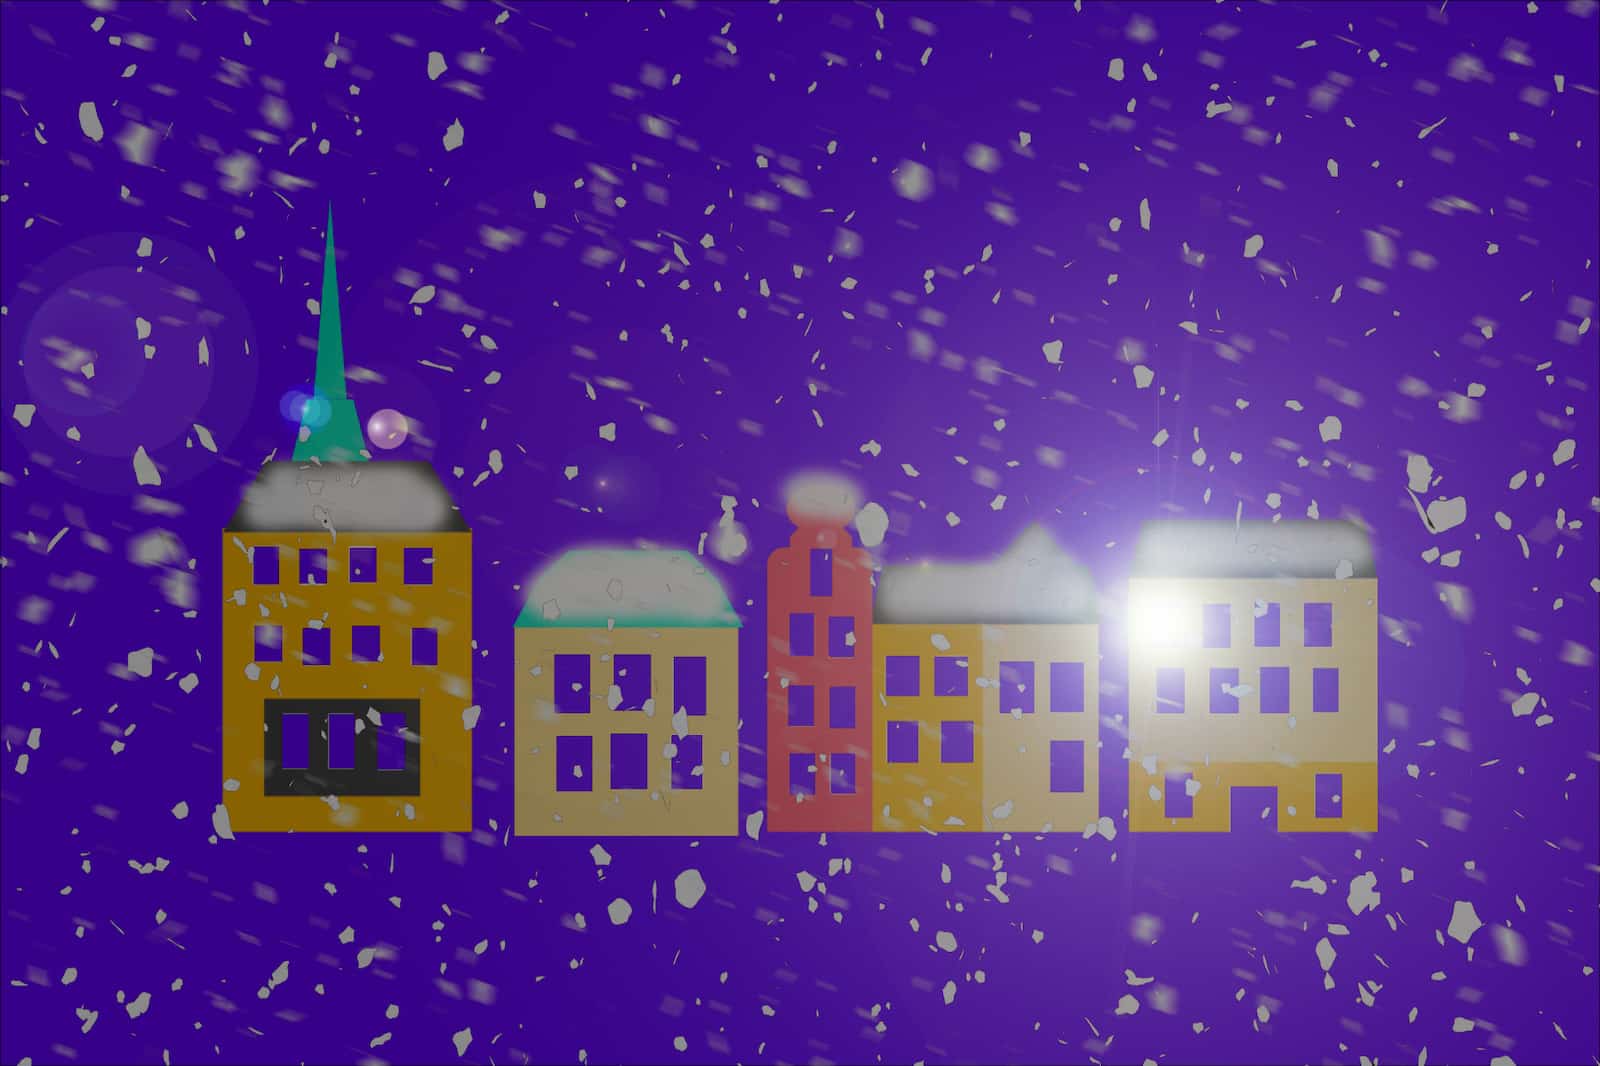 Stockholm winter cartoon image